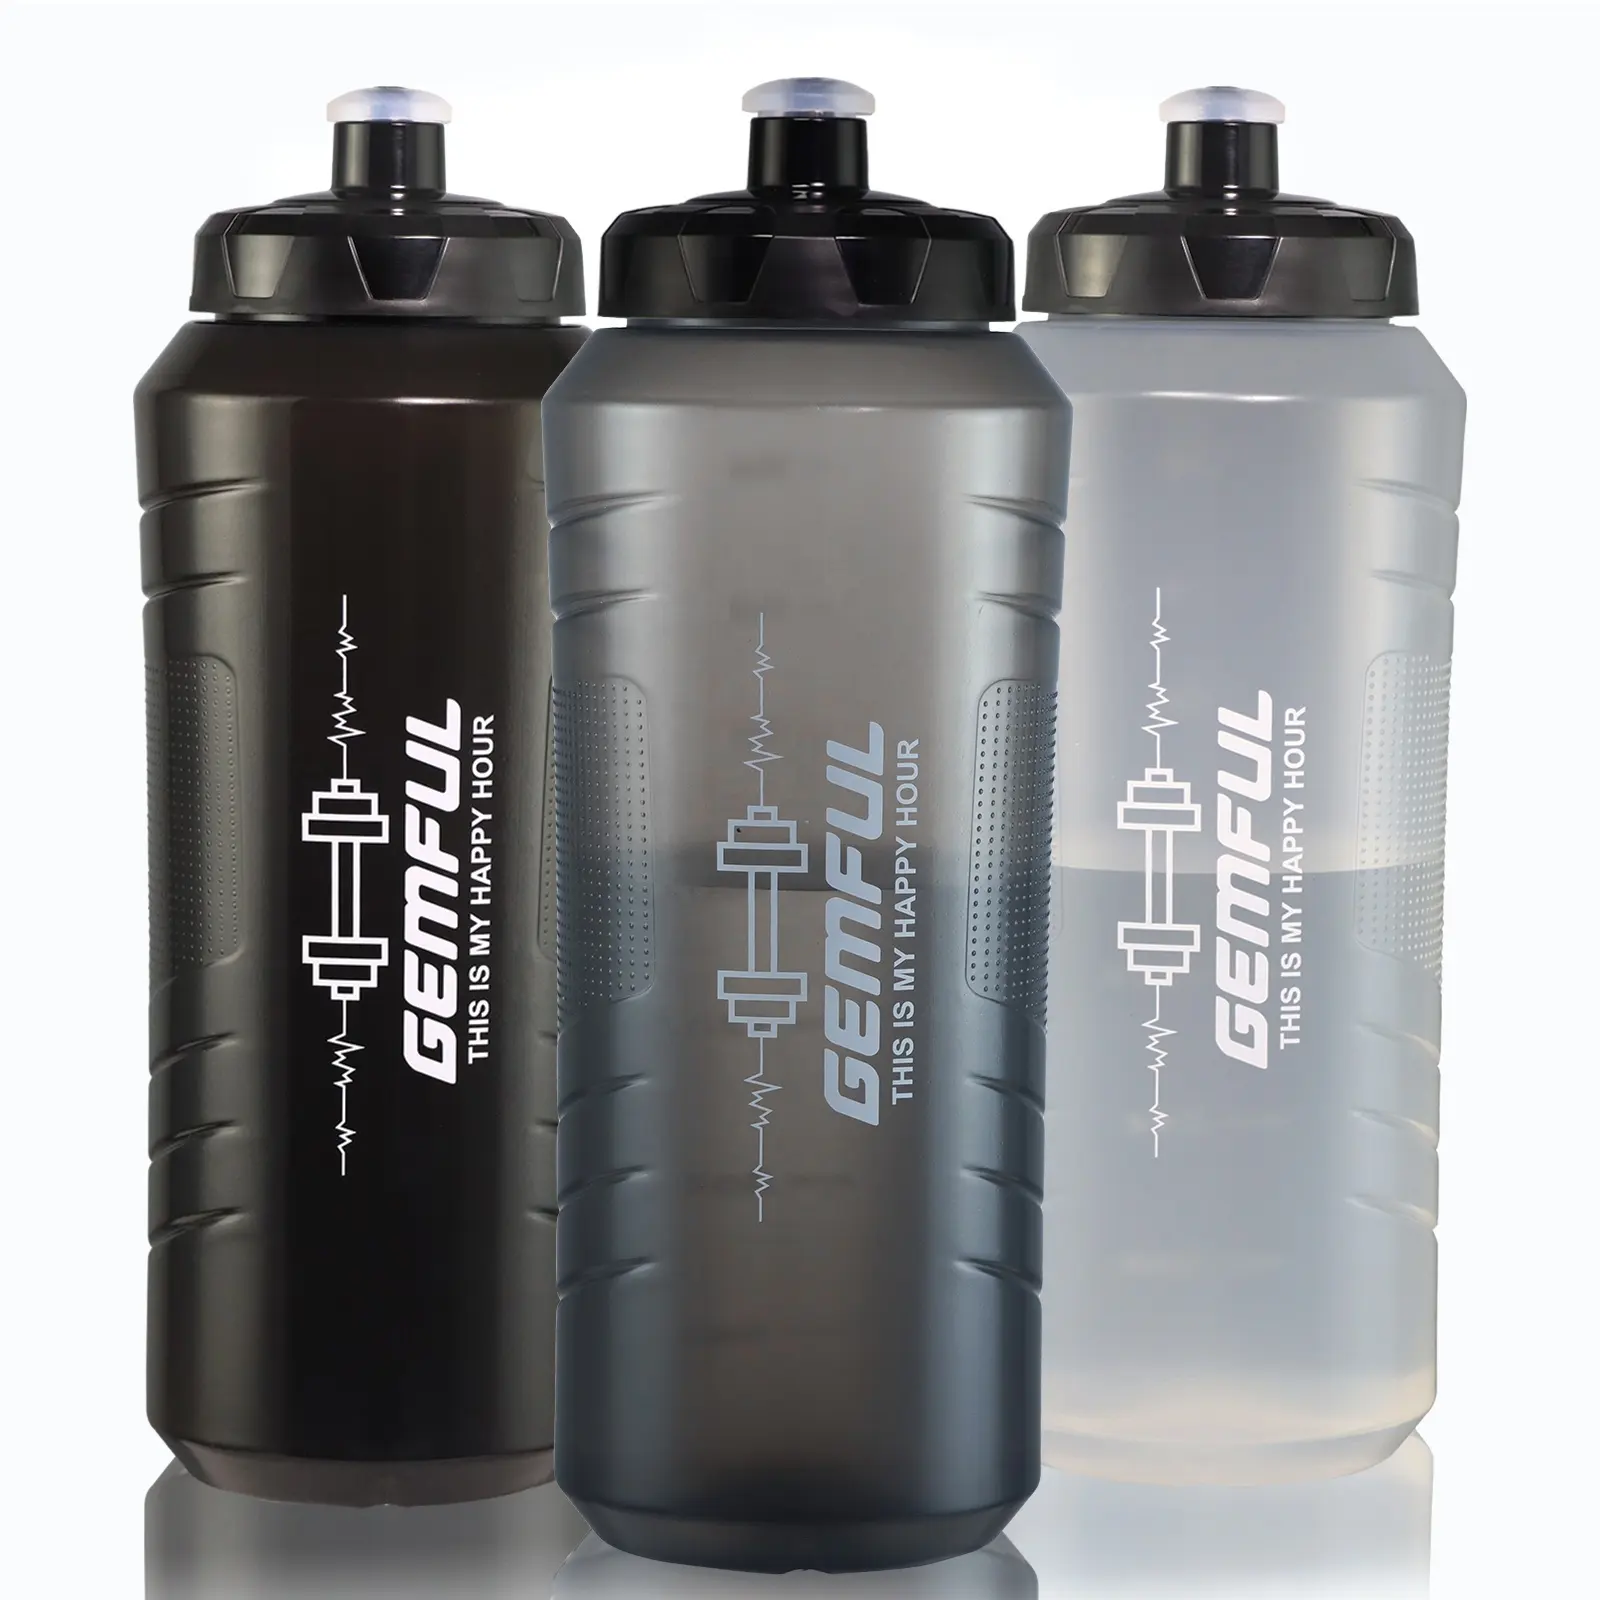 ग्रिप डिज़ाइन वाली जेमफुल पानी की बोतलें बीपीए फ्री जिम पानी की बोतलें स्क्वीज़ वॉटर स्पोर्ट्स 1 लीटर कैम्पिंग प्लास्टिक वयस्क 78 ग्राम